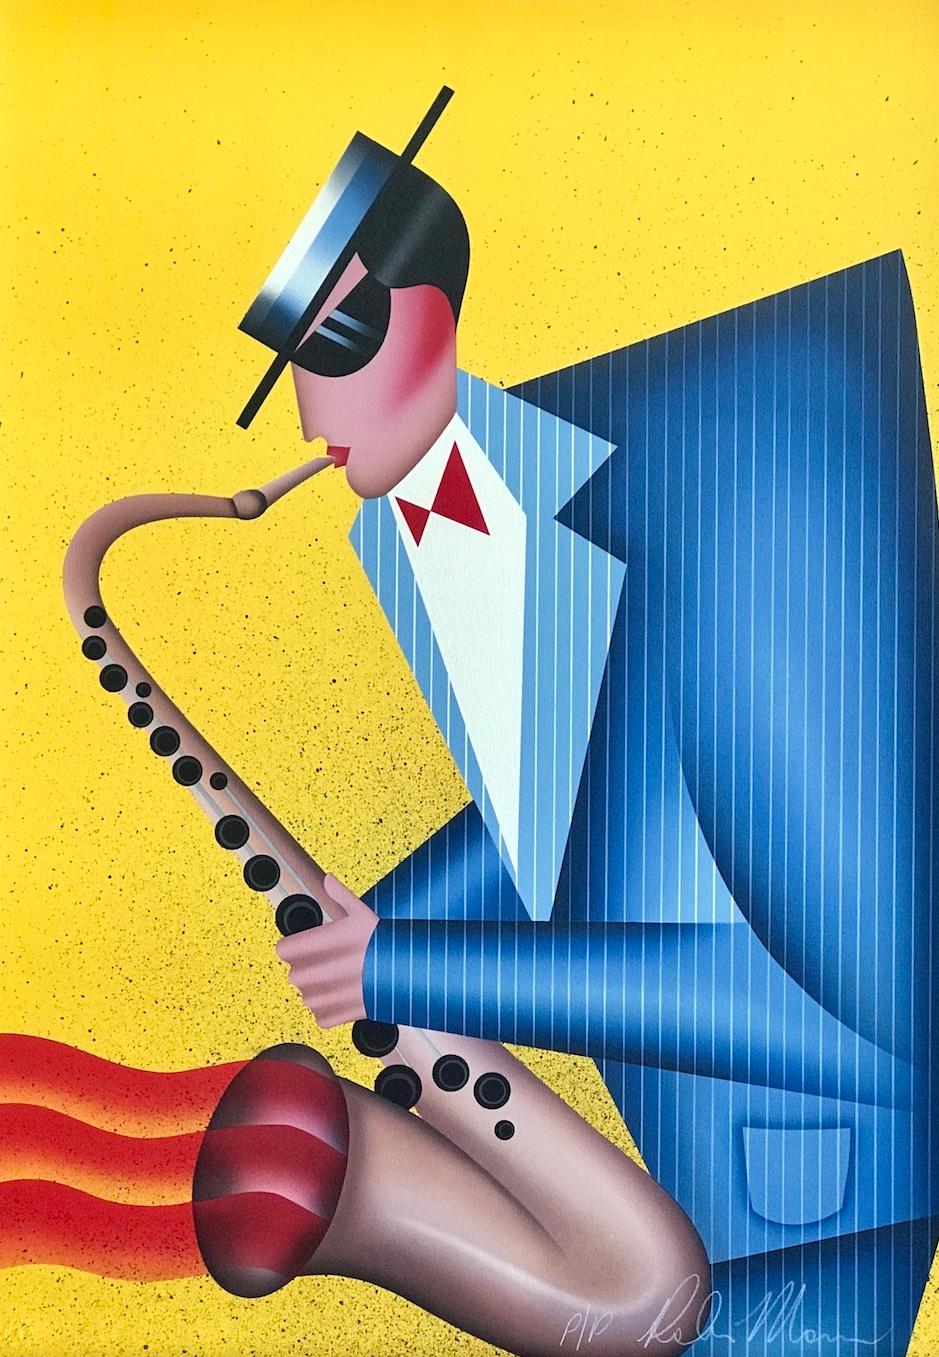 MAX THE SAX Signed Lithograph, Art Deco Style Musician Portrait, Saxophone